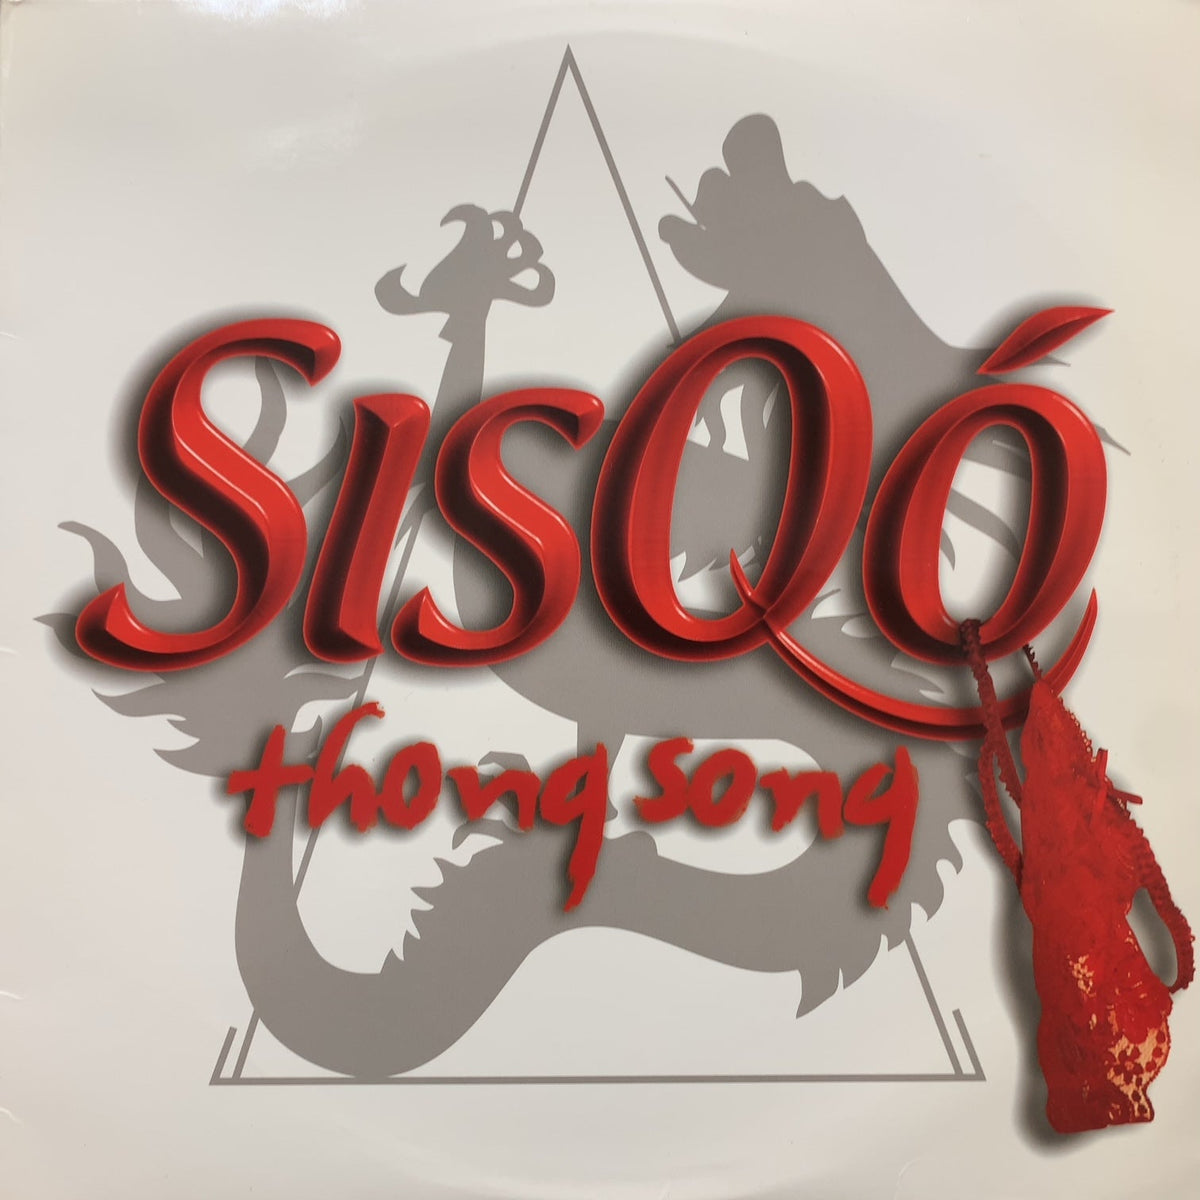 SISQO / Thong Song (314 562 599-1